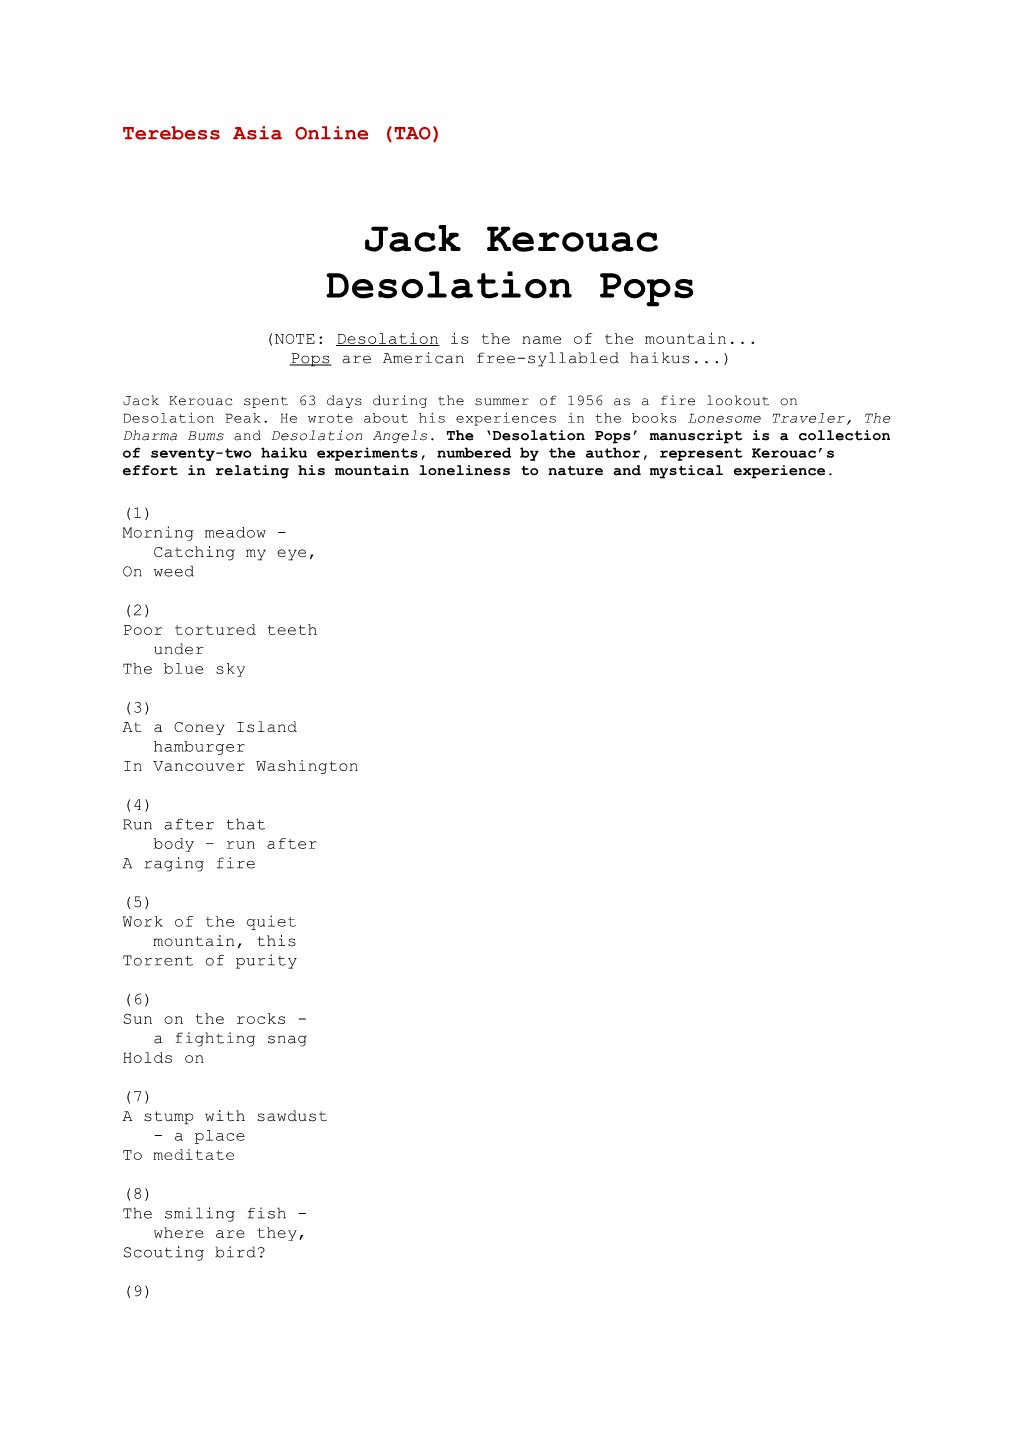 Desolation Pops by Jack Kerouac